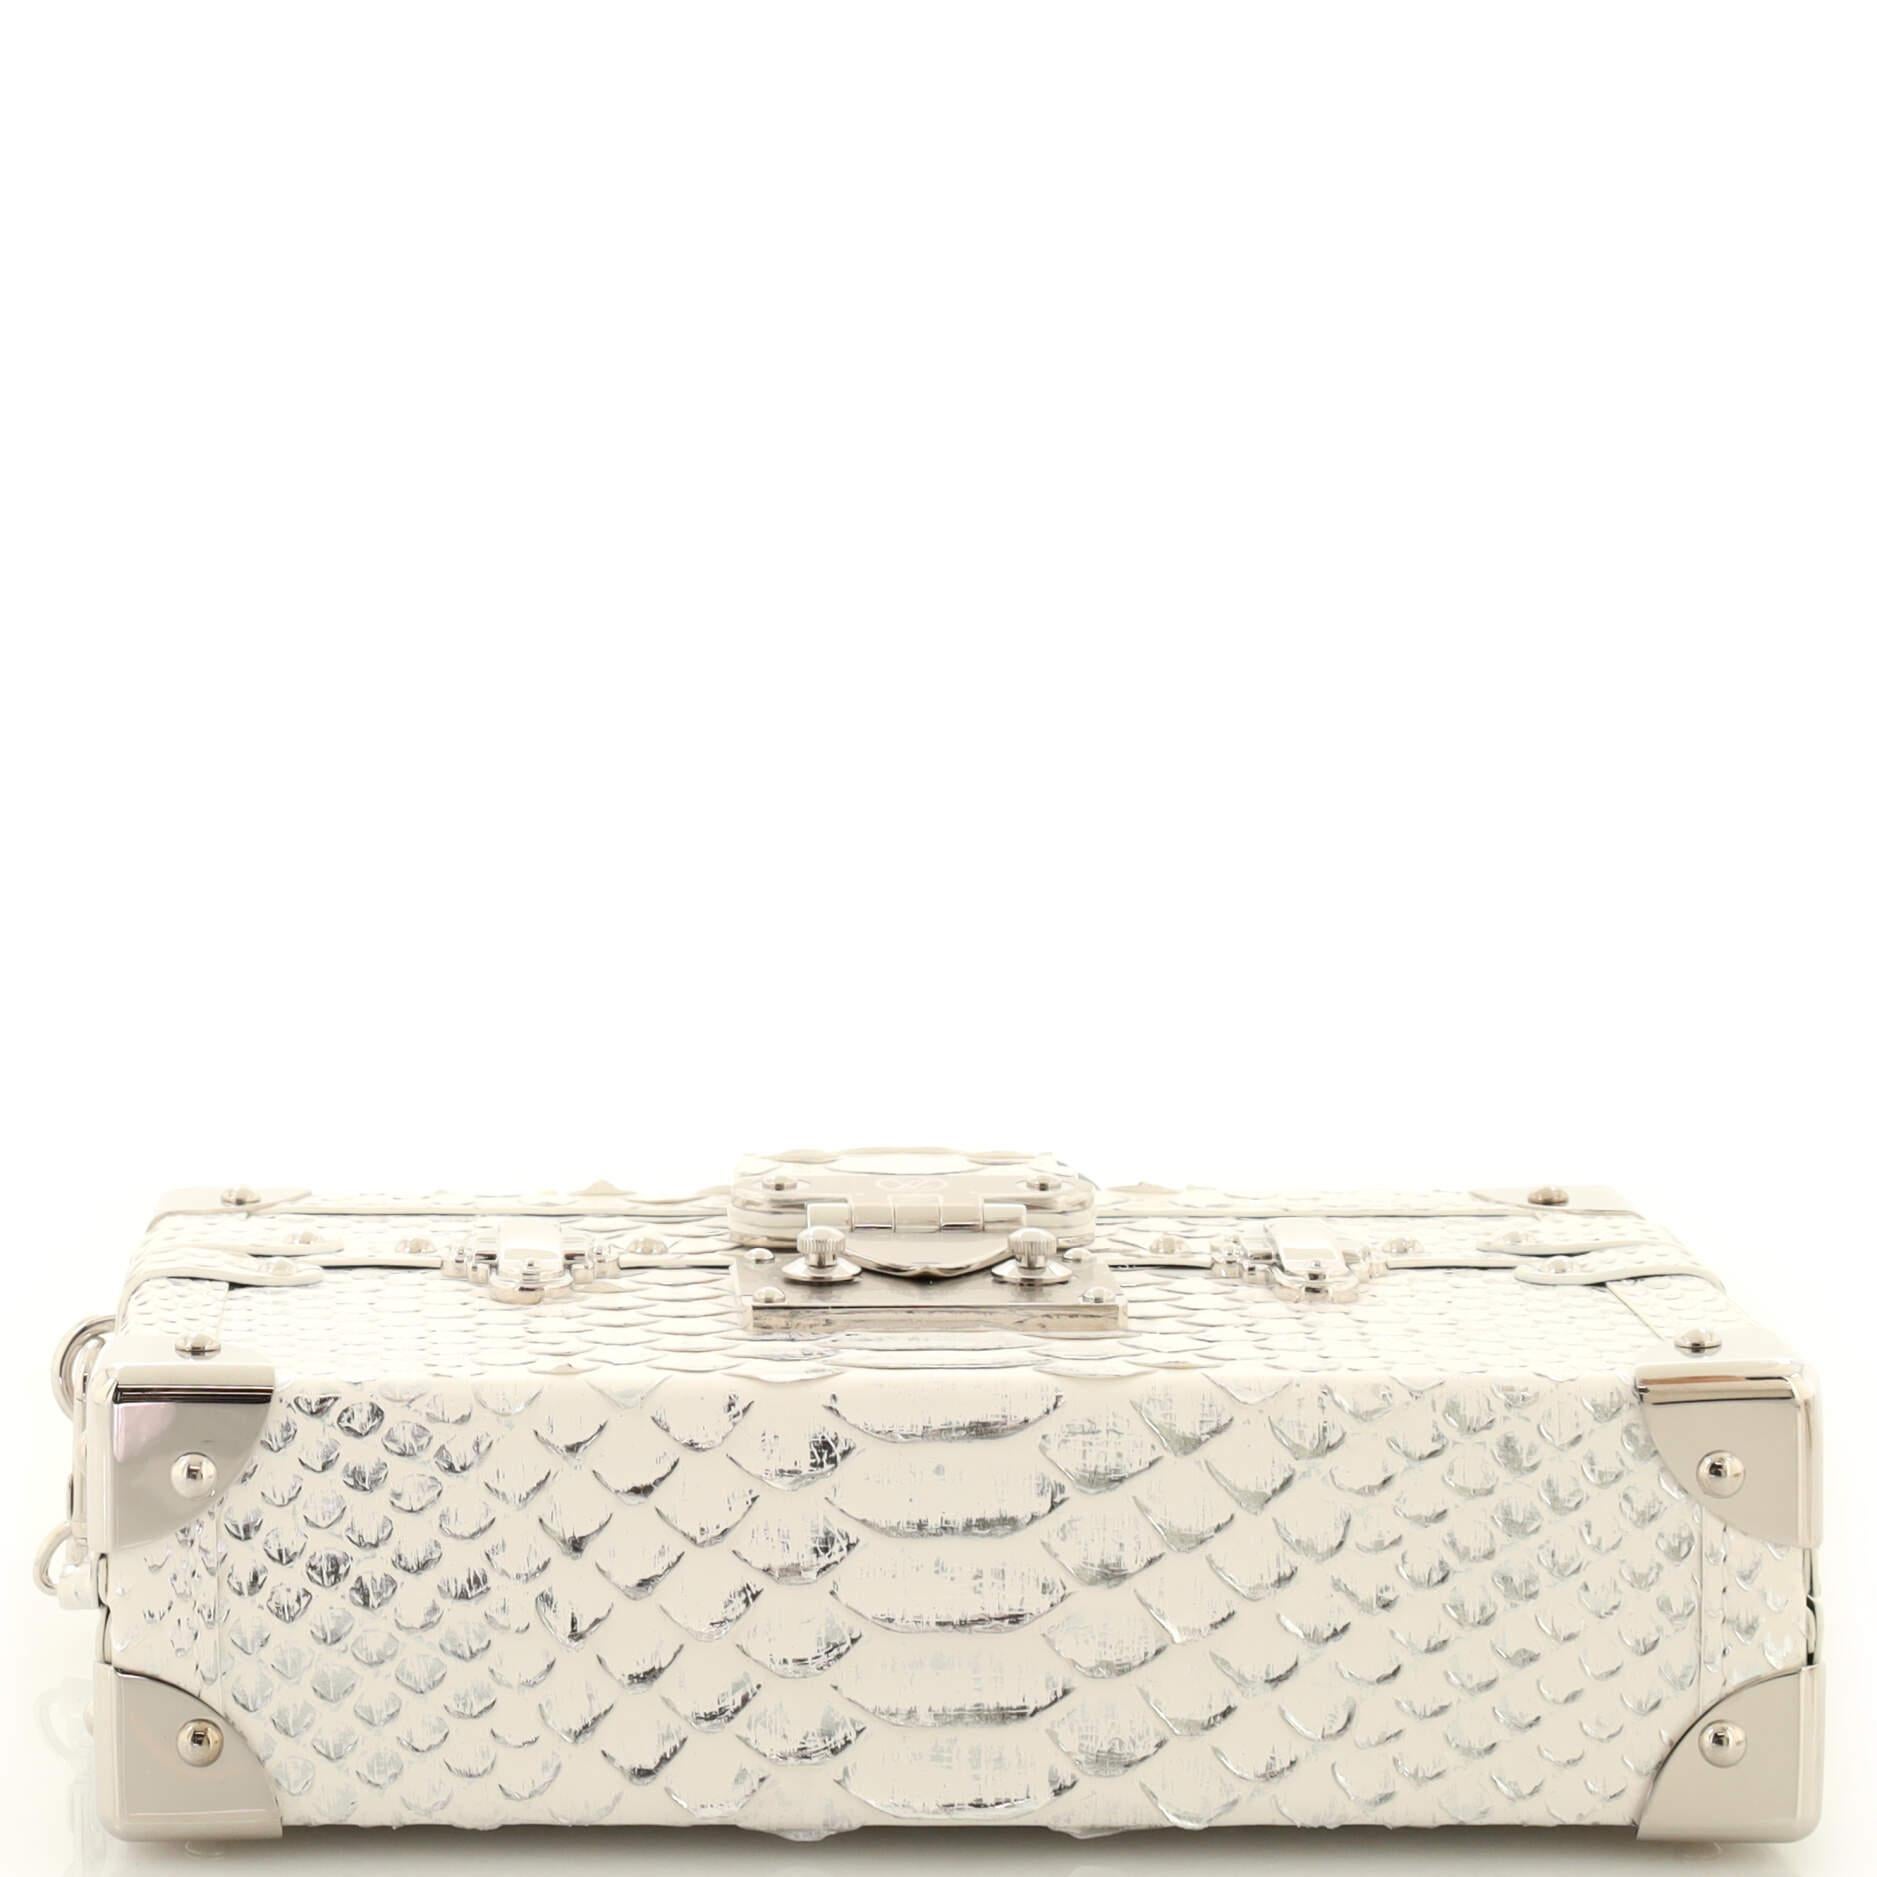 Beige Louis Vuitton Petite Malle Handbag Python